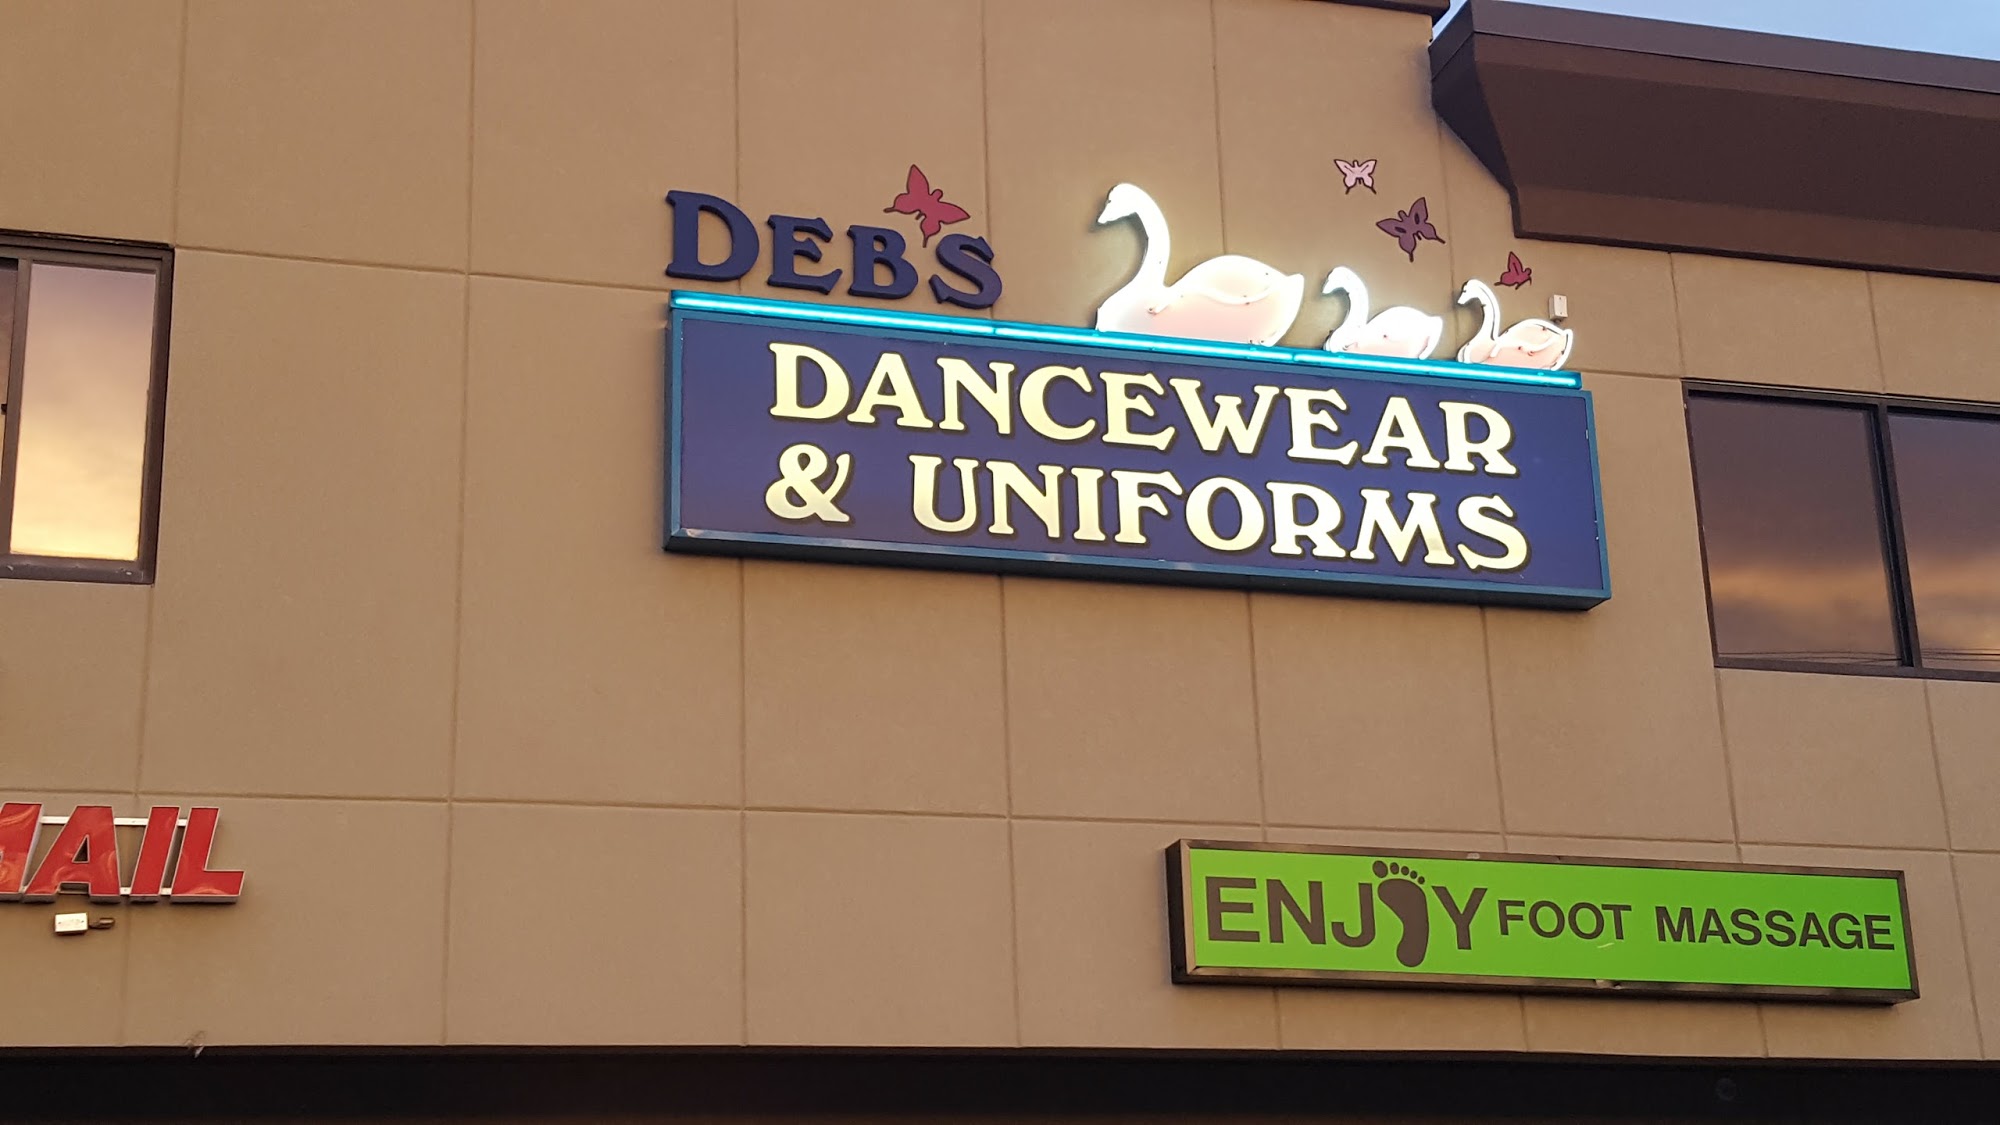 Deb's Dancewear & Uniforms